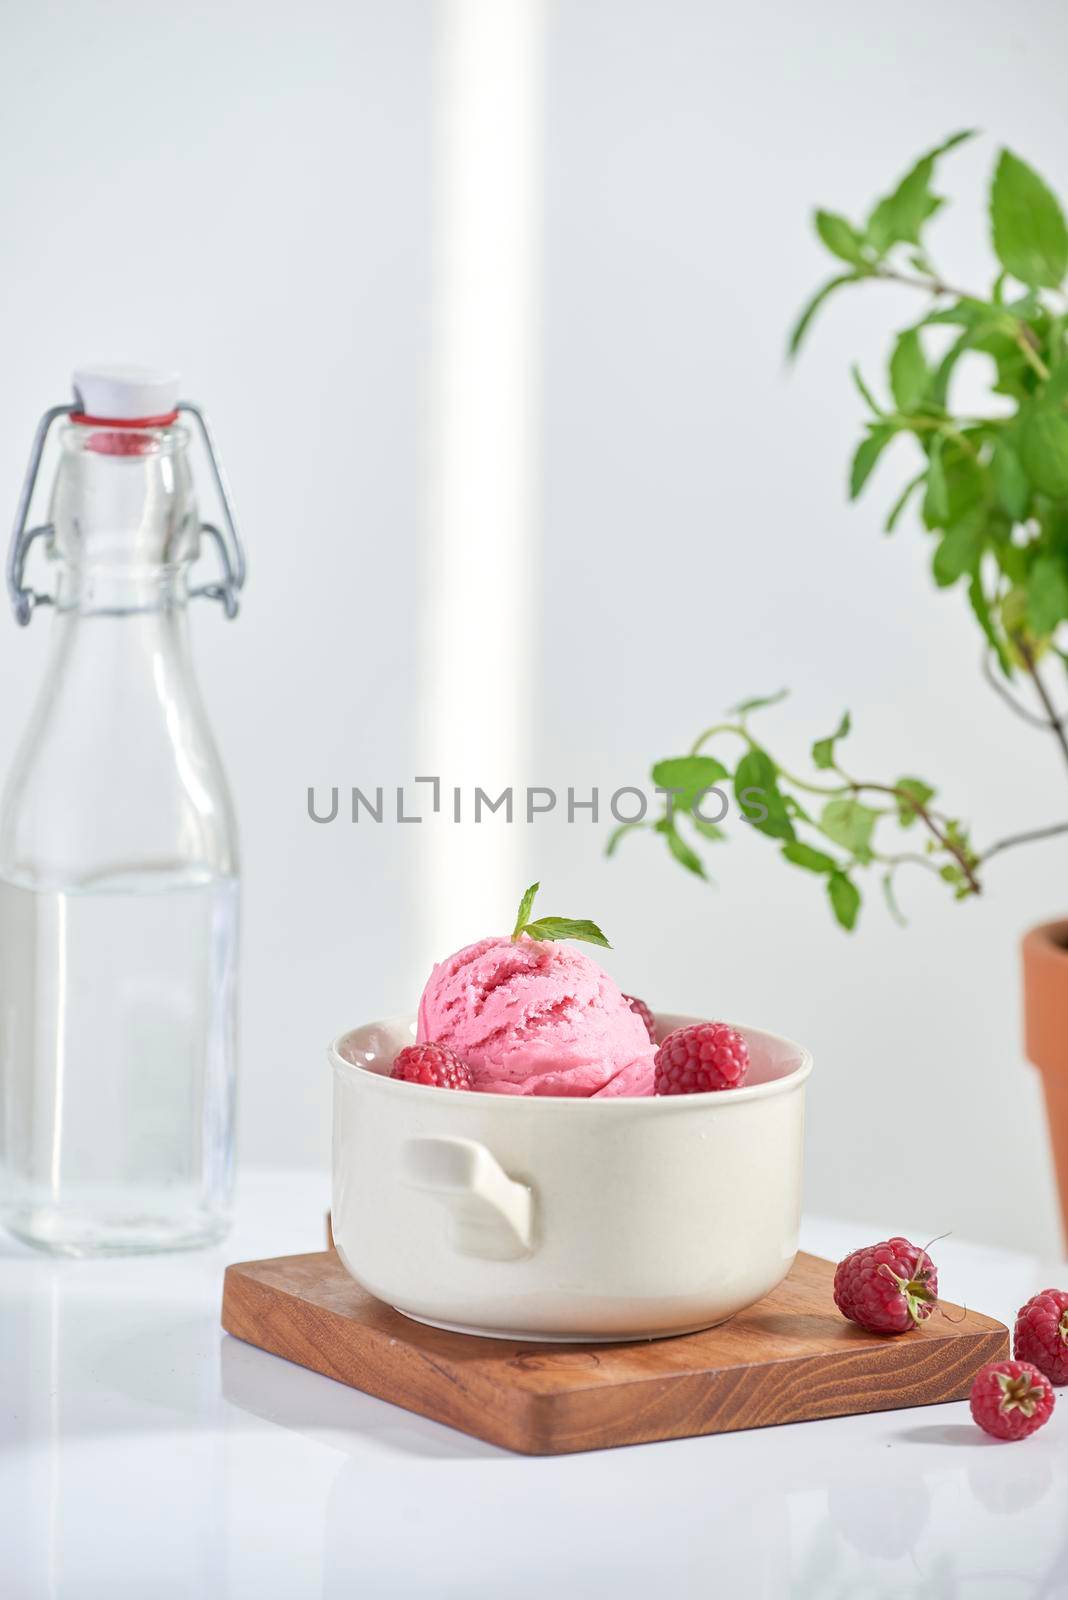 Frozen yogurt dessert with cherries by makidotvn